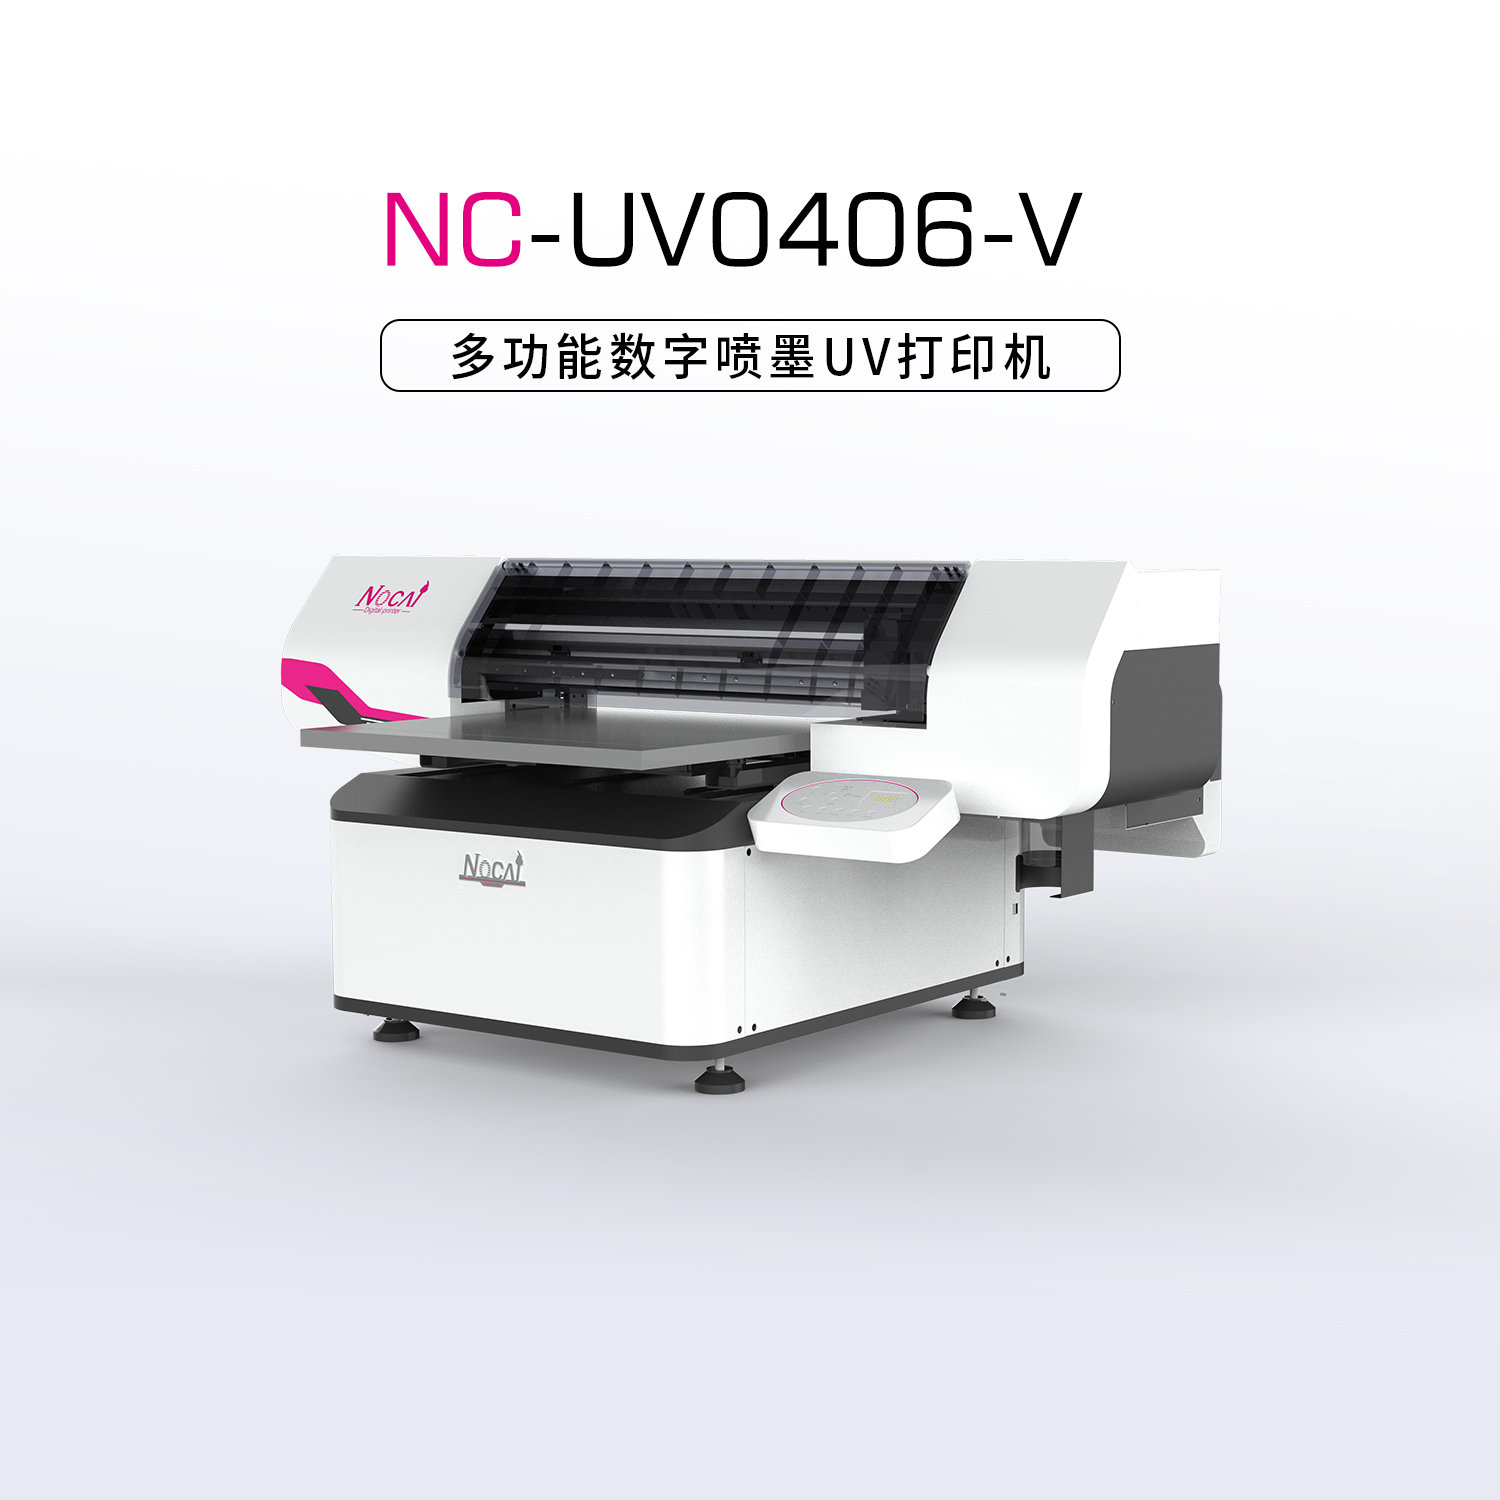 NC-UV0406-Ⅴ小型UV平板打印机